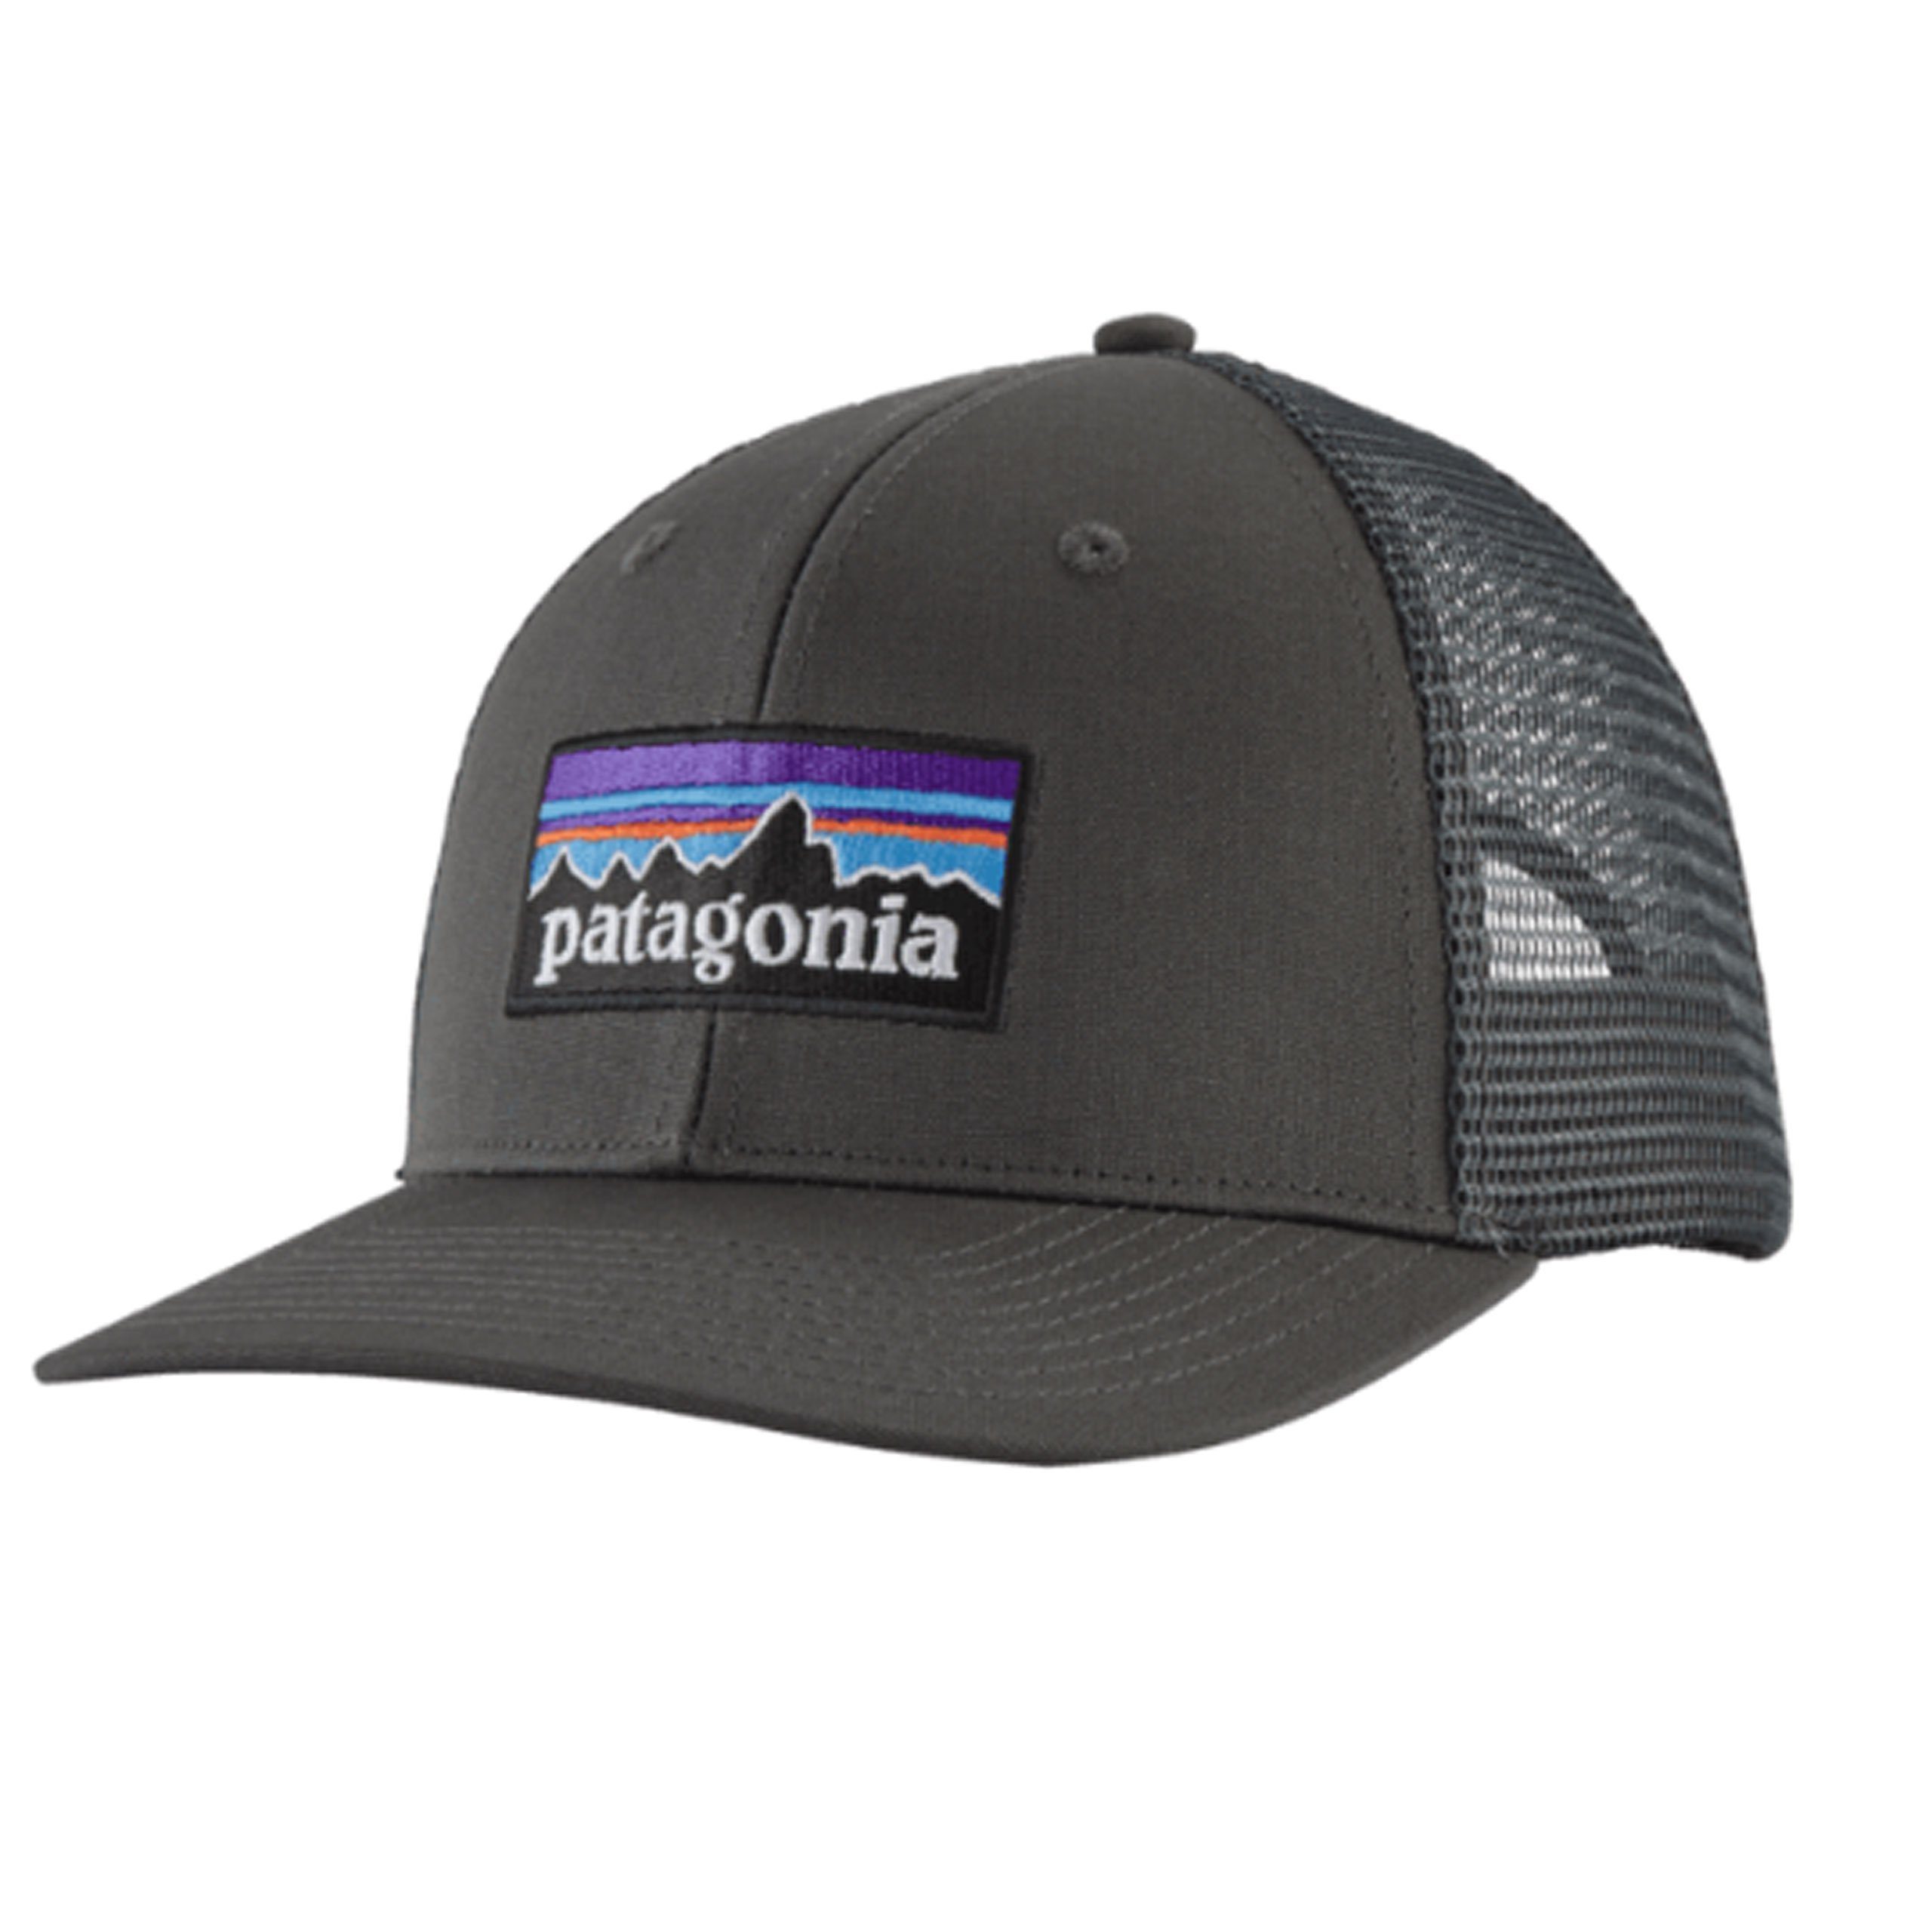 Patagonia Baseball Cap Patagonia P-6 Trucker Hat - luftdurchlässige Truckercap/Baseballkappe forge grey